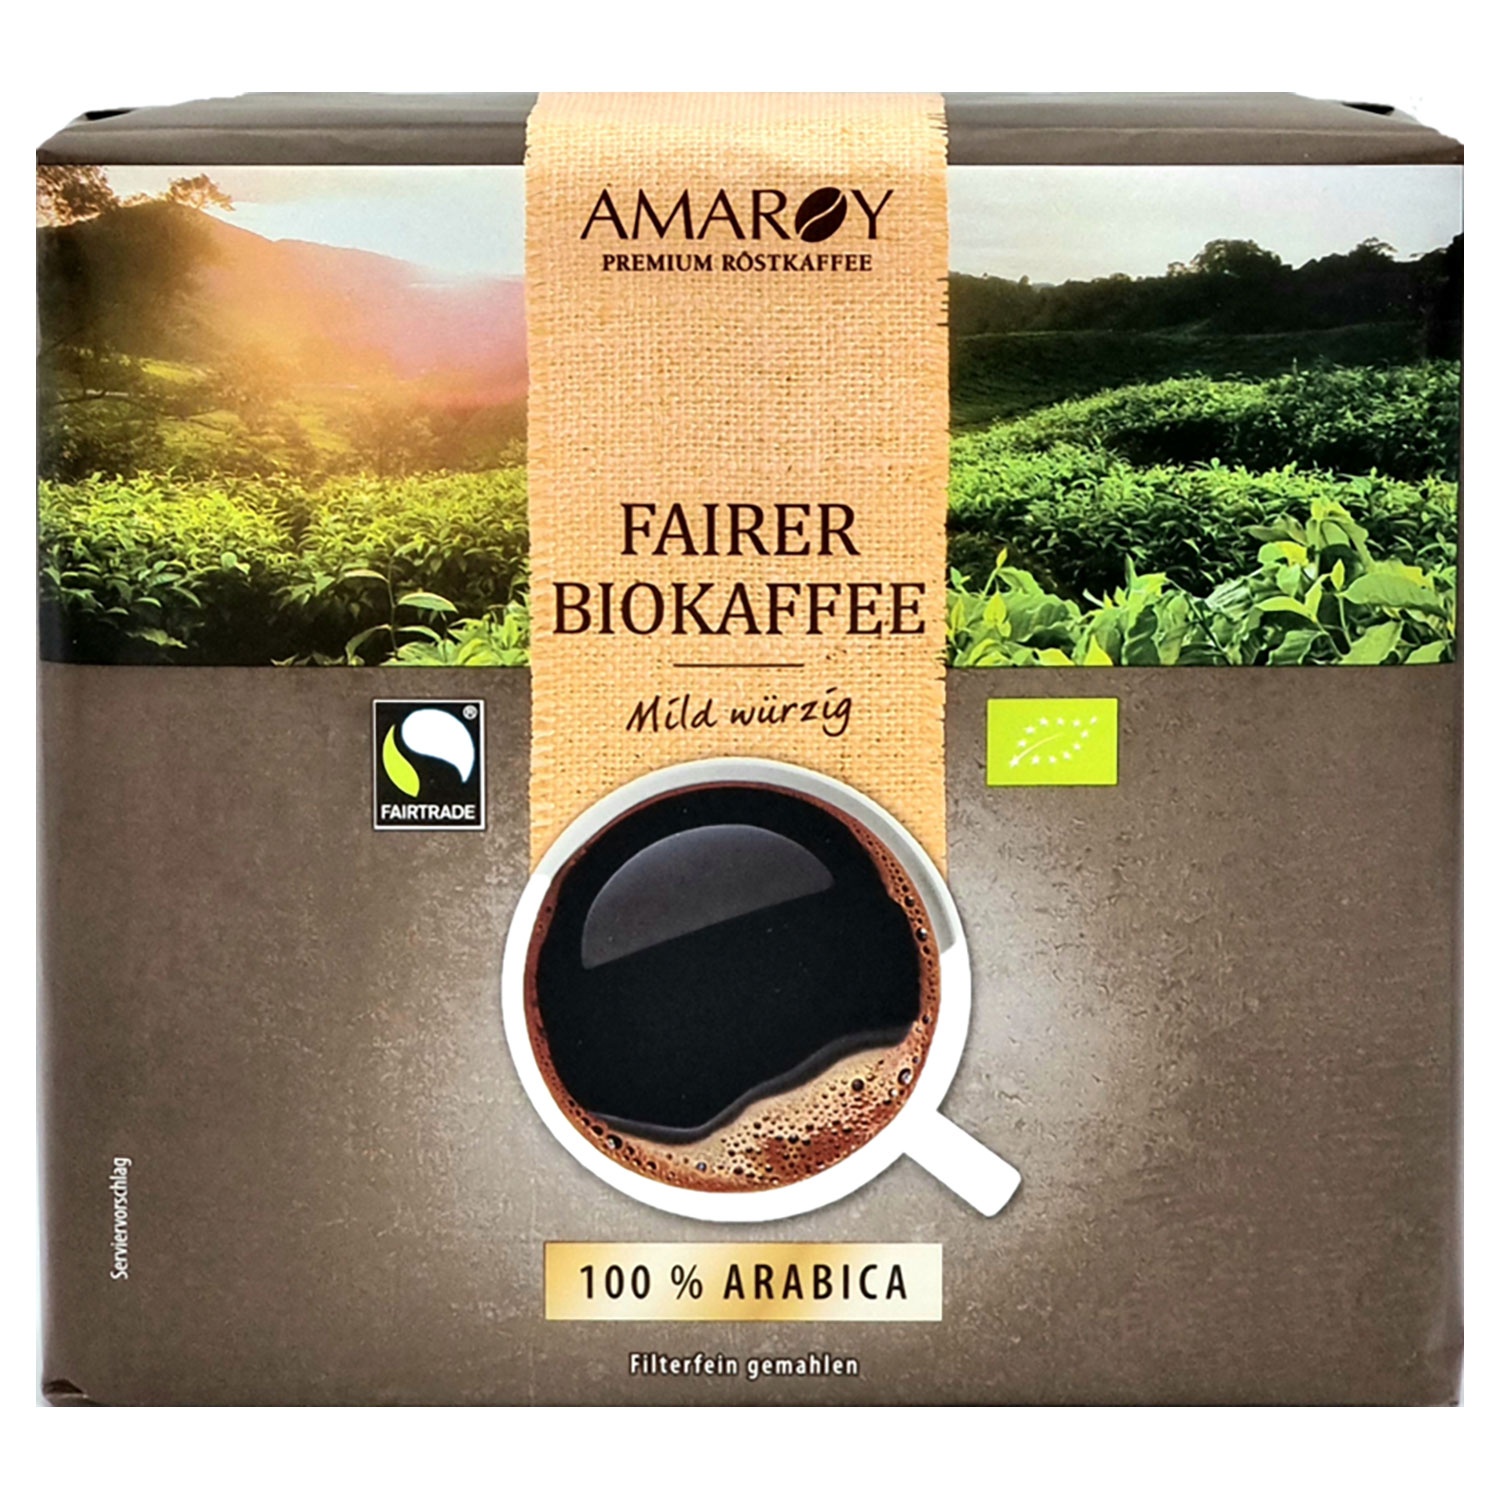 AMAROY Bio-Fairer Biokaffee 500 g